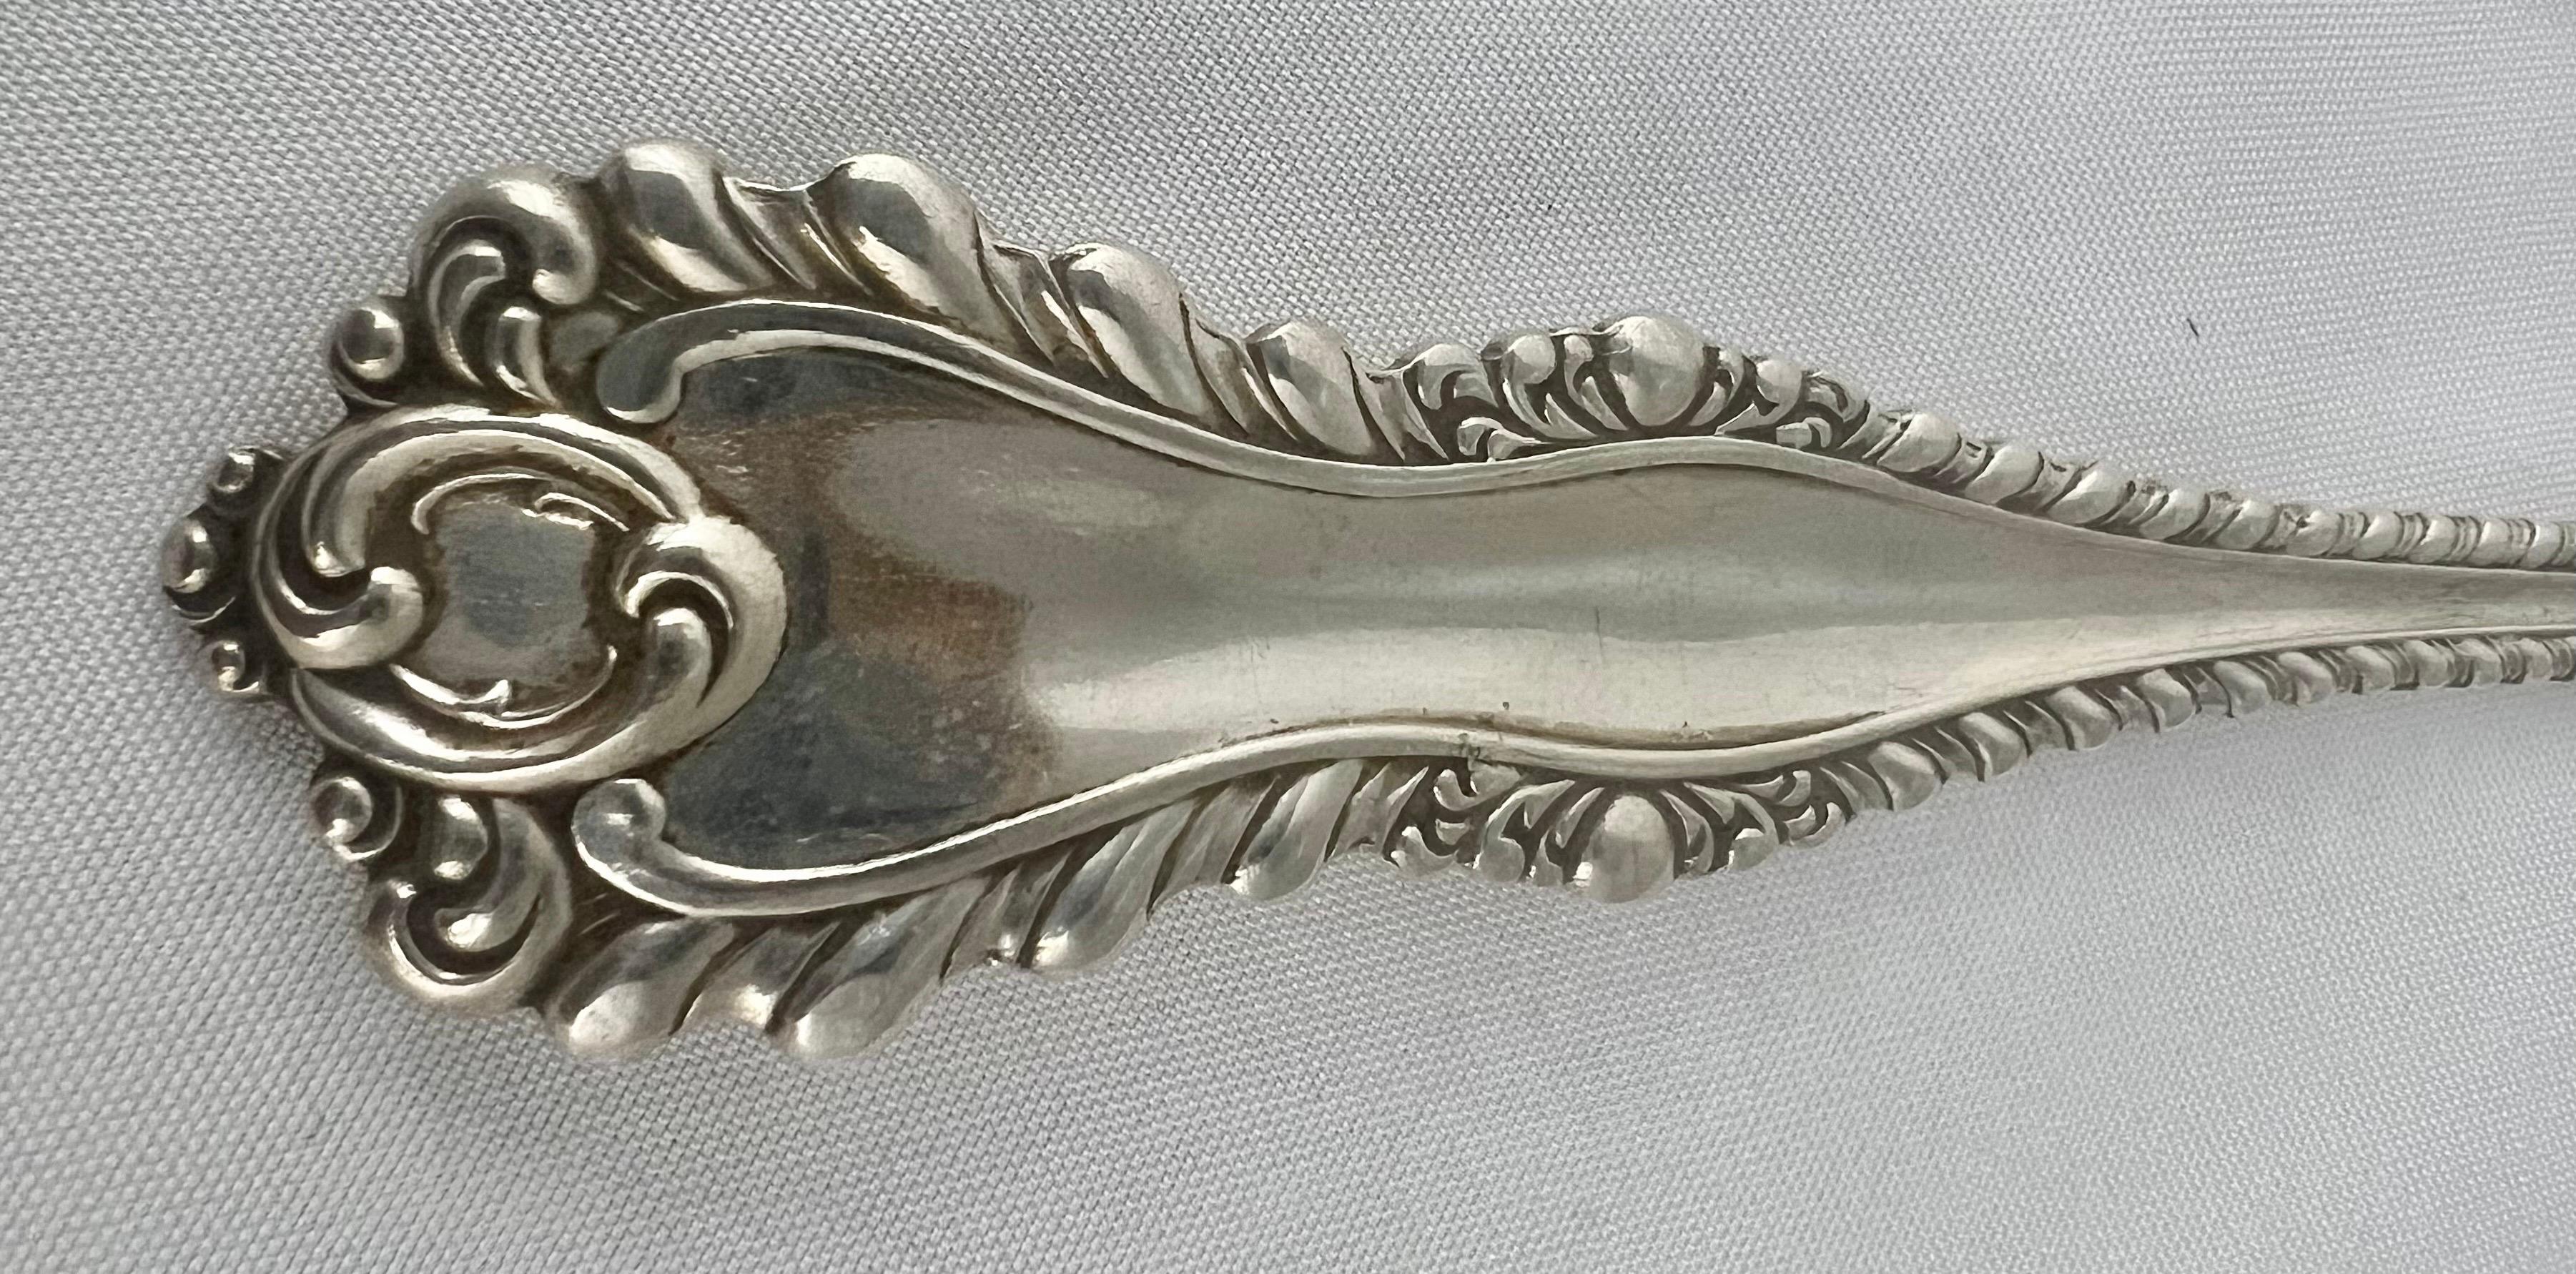 Pair of Sterling Silver Spoons Monogrammed 